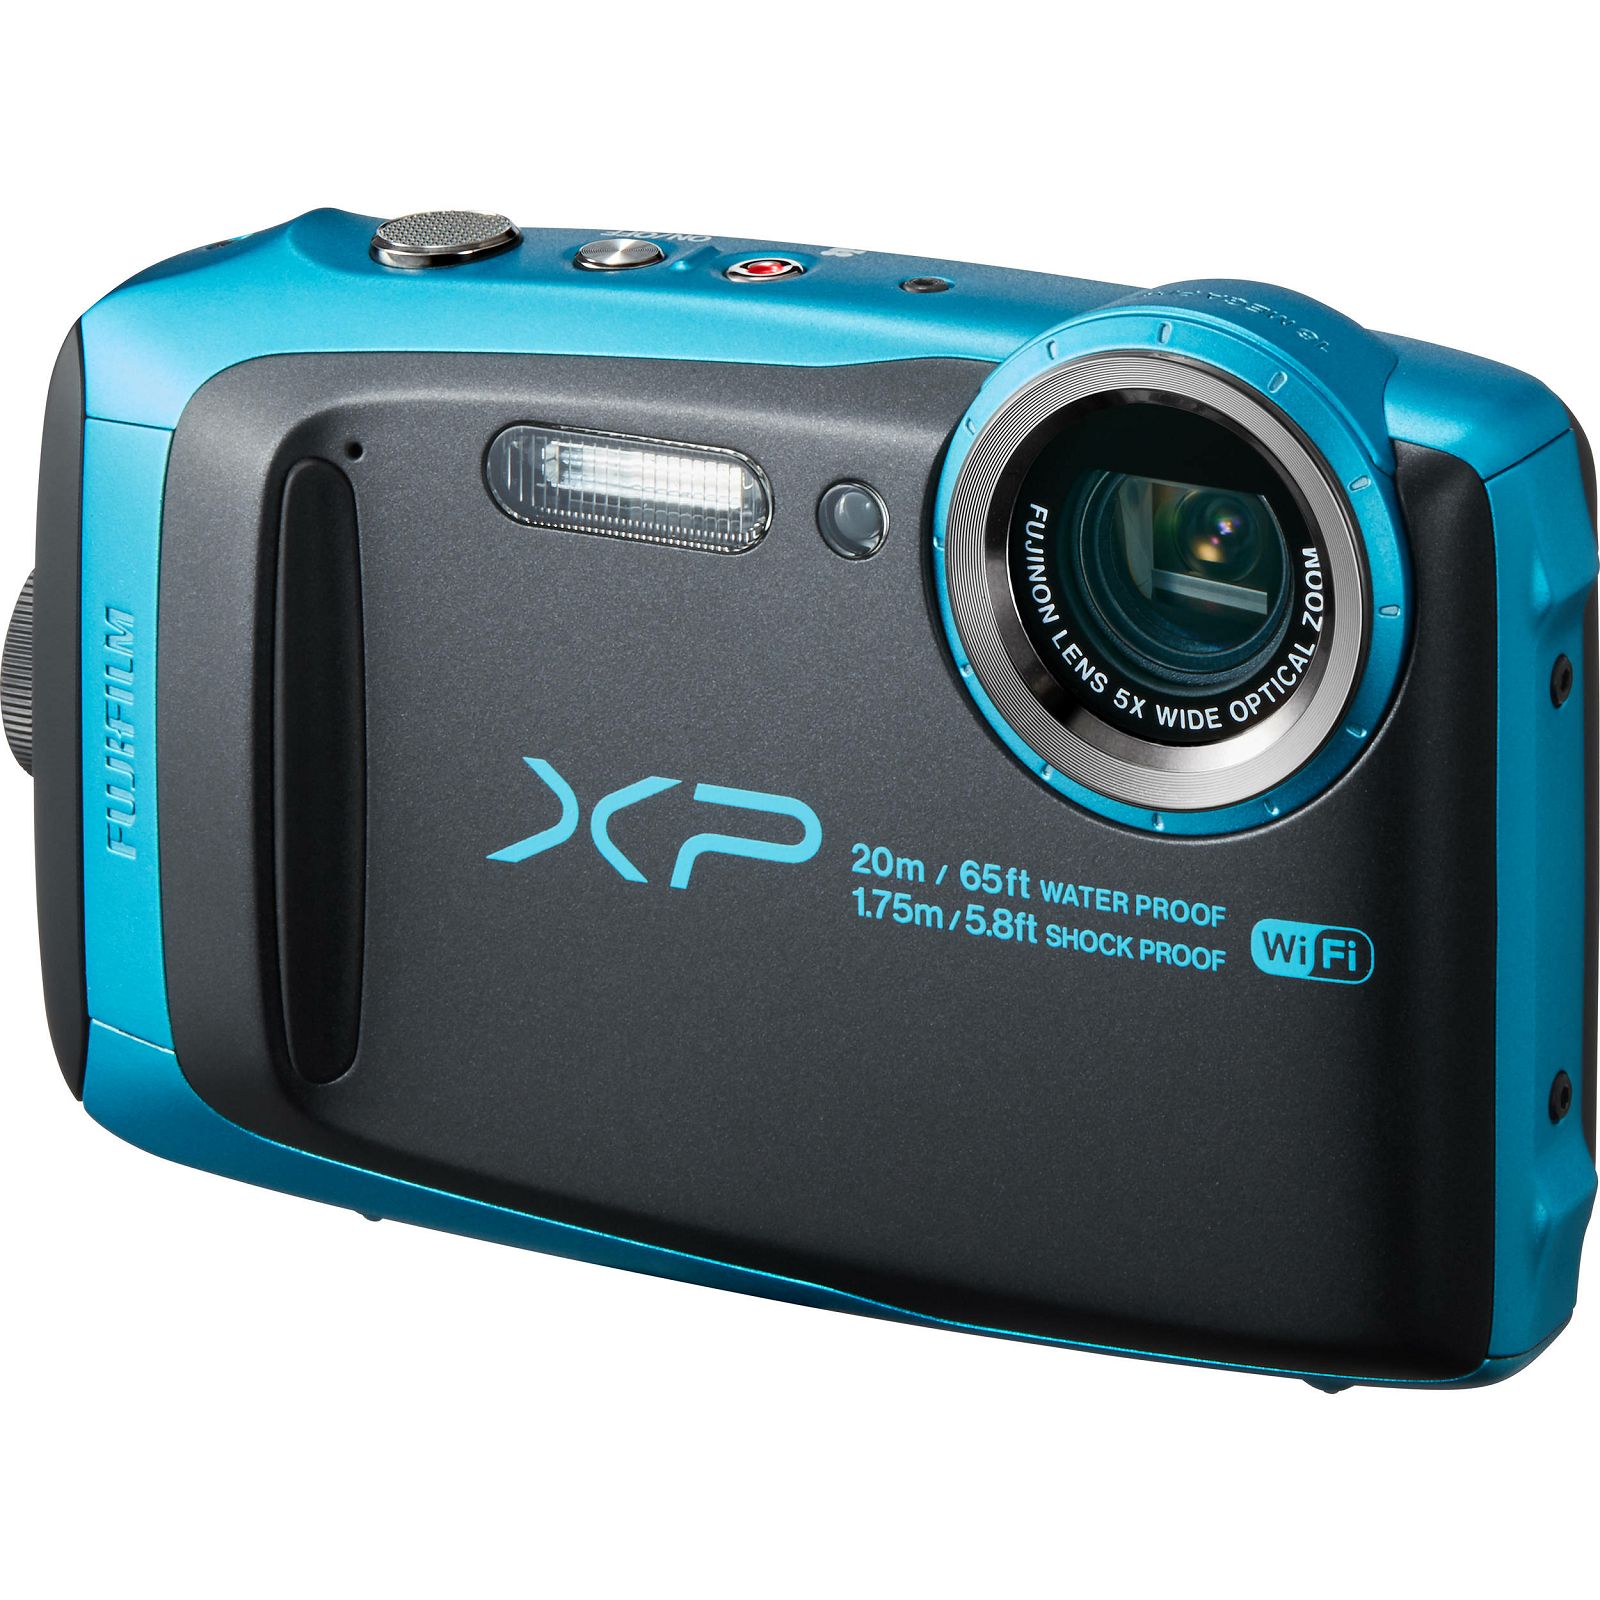 Fujifilm FinePix XP120 Sky Blue Black Fuji XP-120 nebesko plavi crni vodootporni podvodni digitalni fotoaparat WiFi remote 5x zoom 16.4Mpx 28mm BSI-CMOS sensor Digital camera